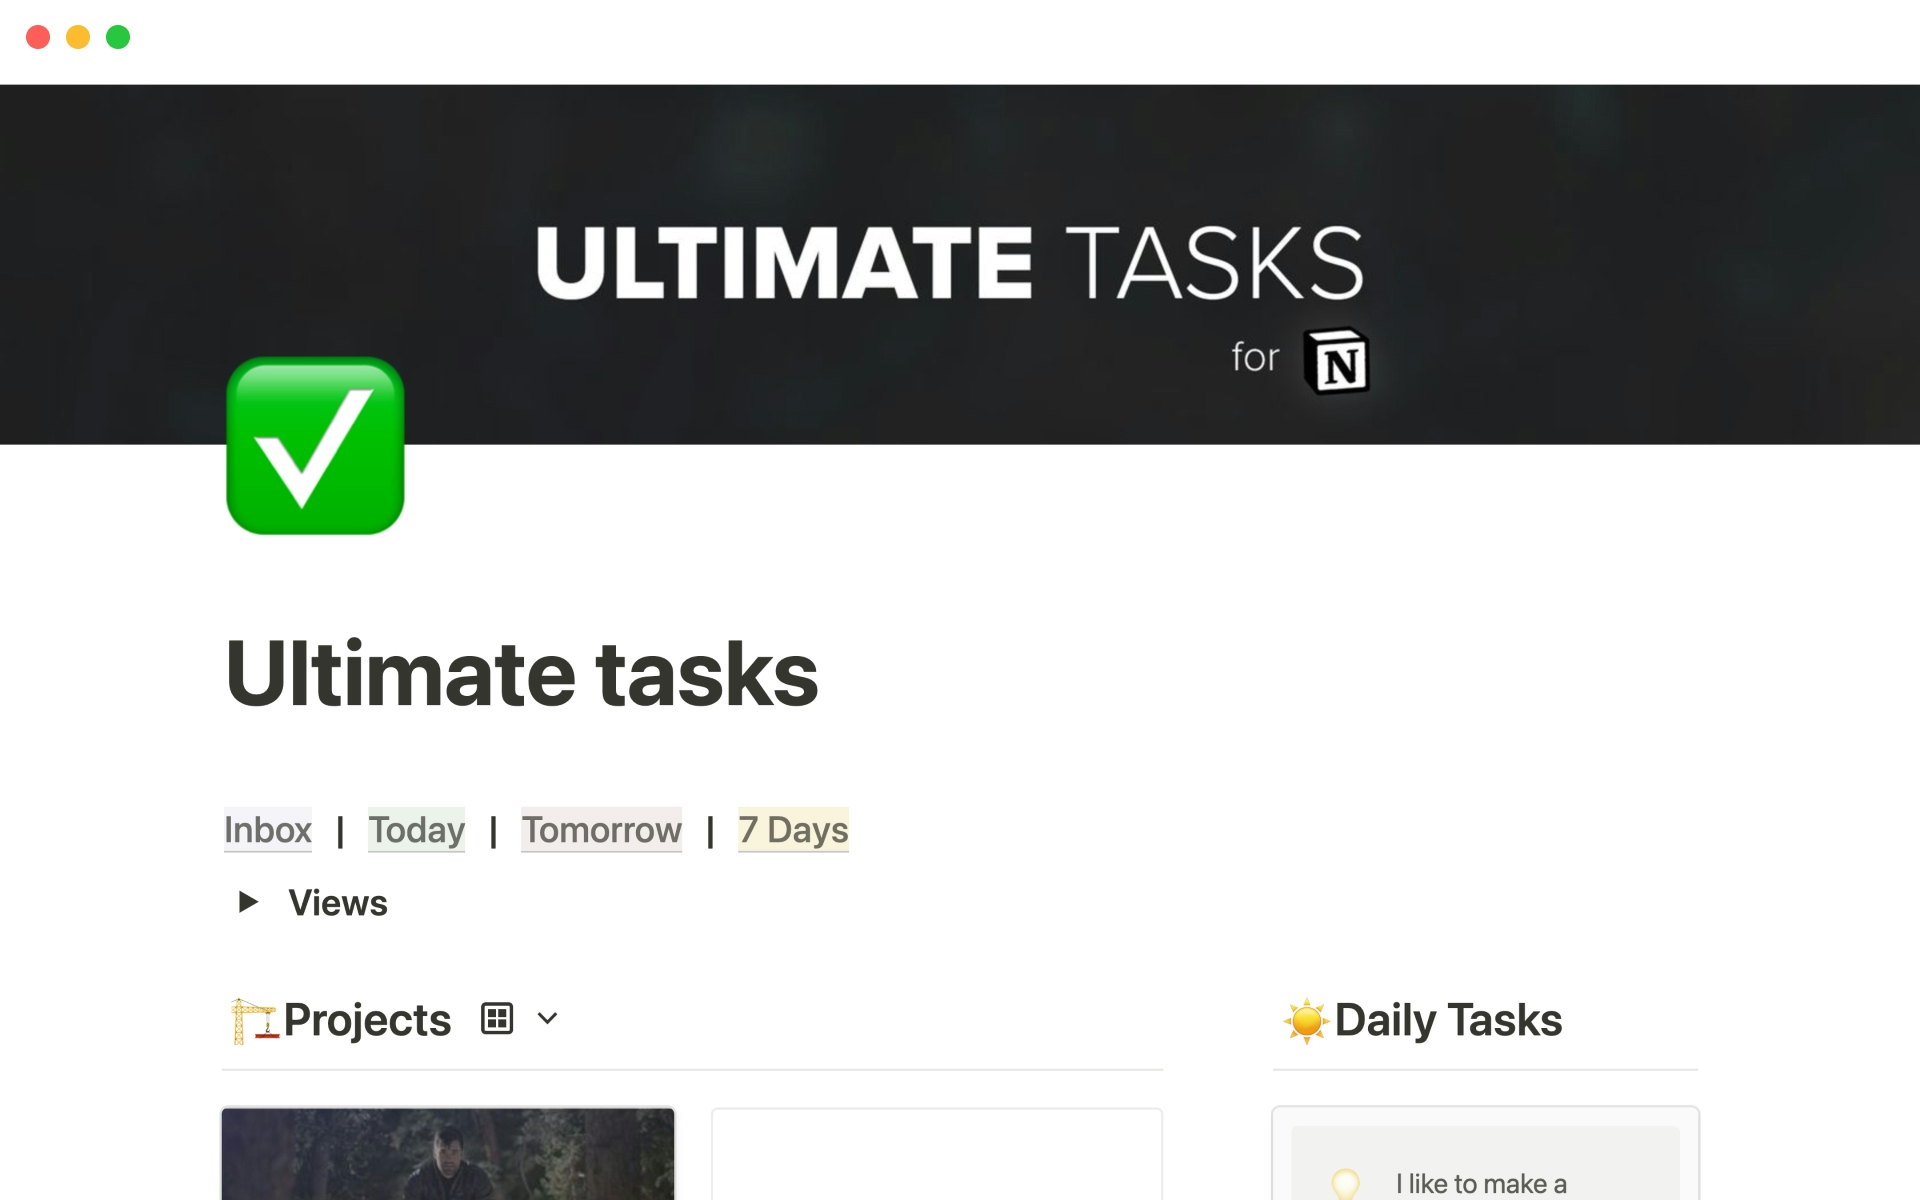 The desktop image for the Ultimate Tasks template